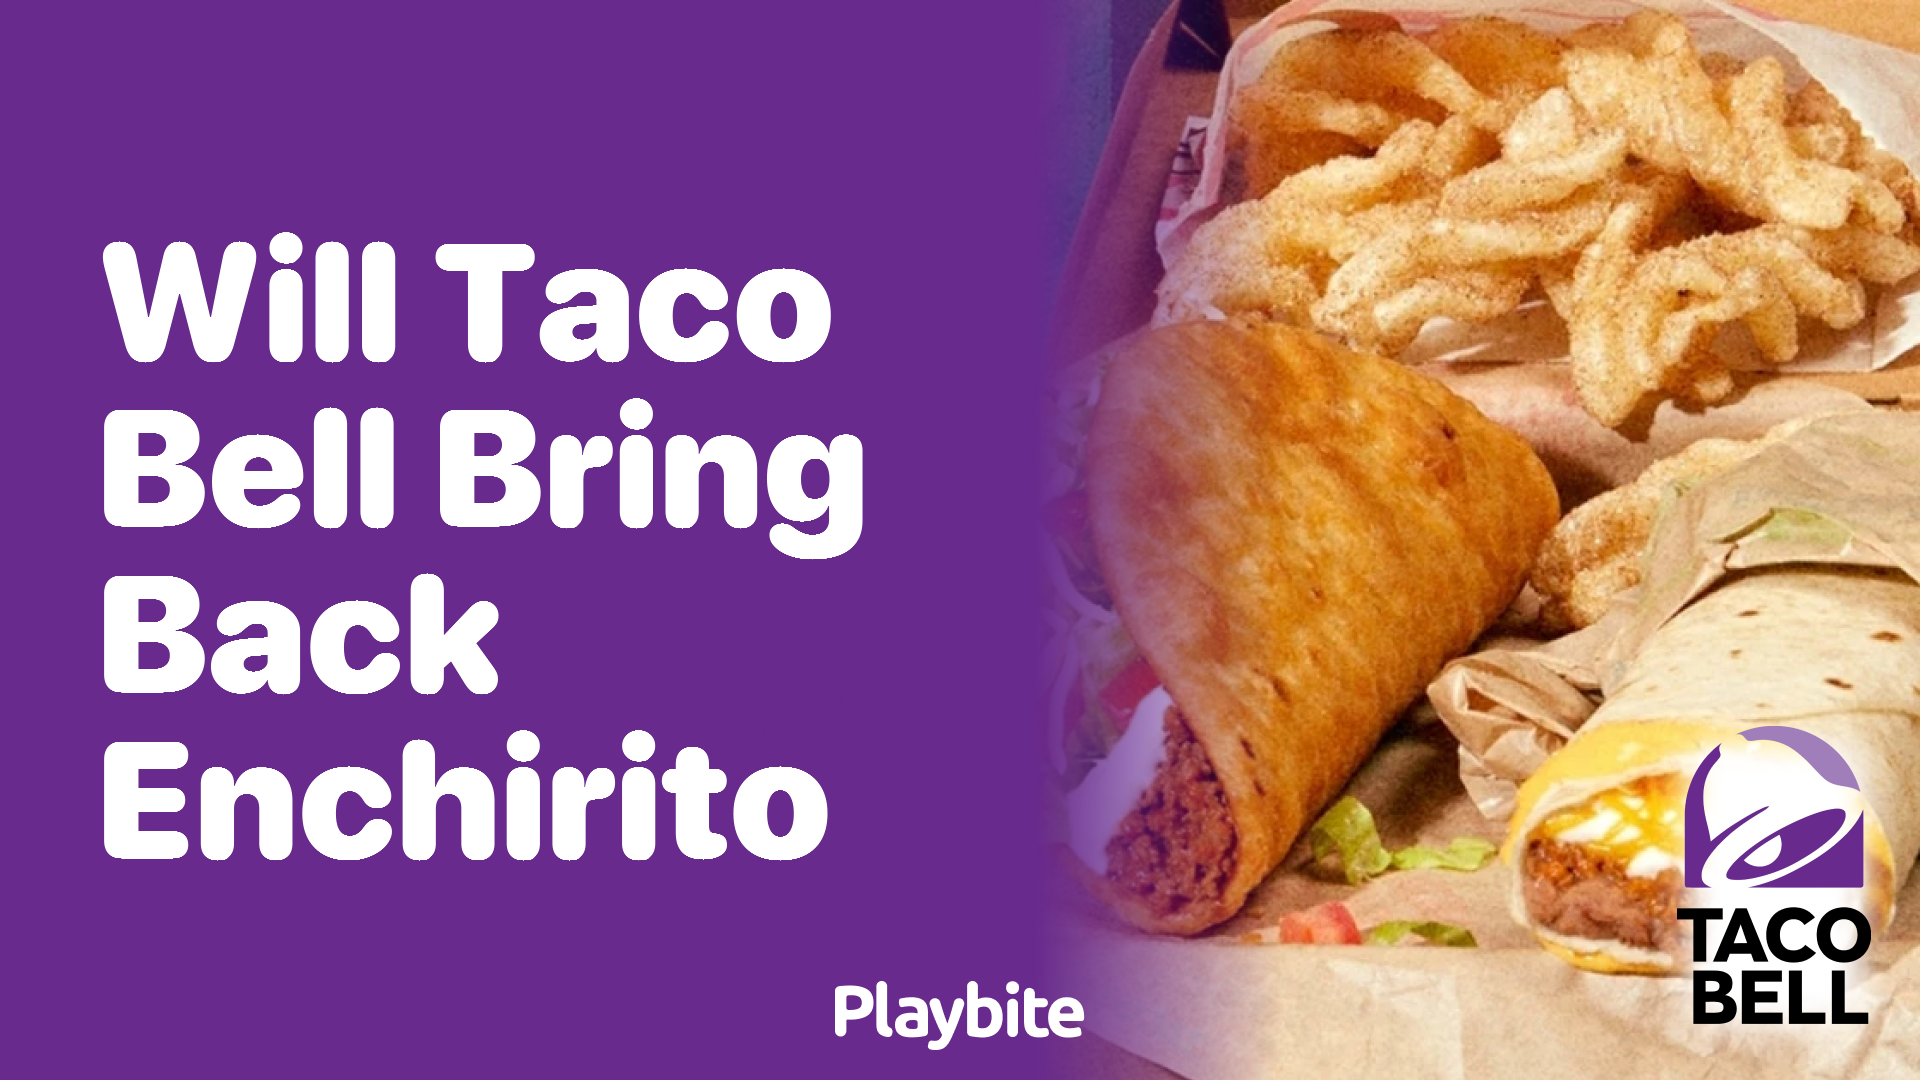 Will Taco Bell Bring Back the Enchirito?